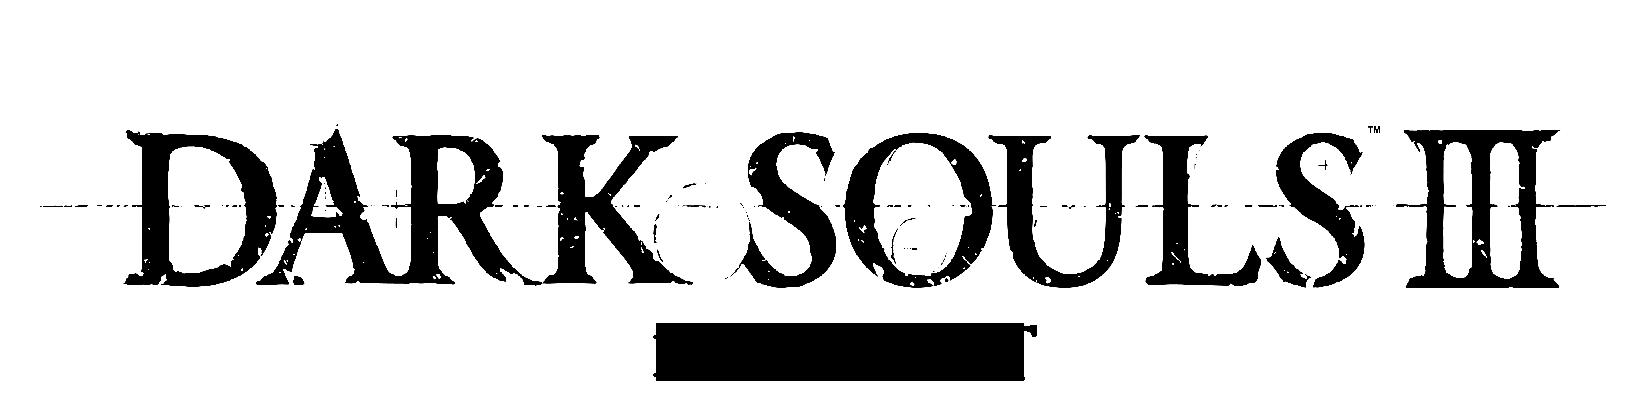 File:Demon's Souls logo black.svg - Wikimedia Commons